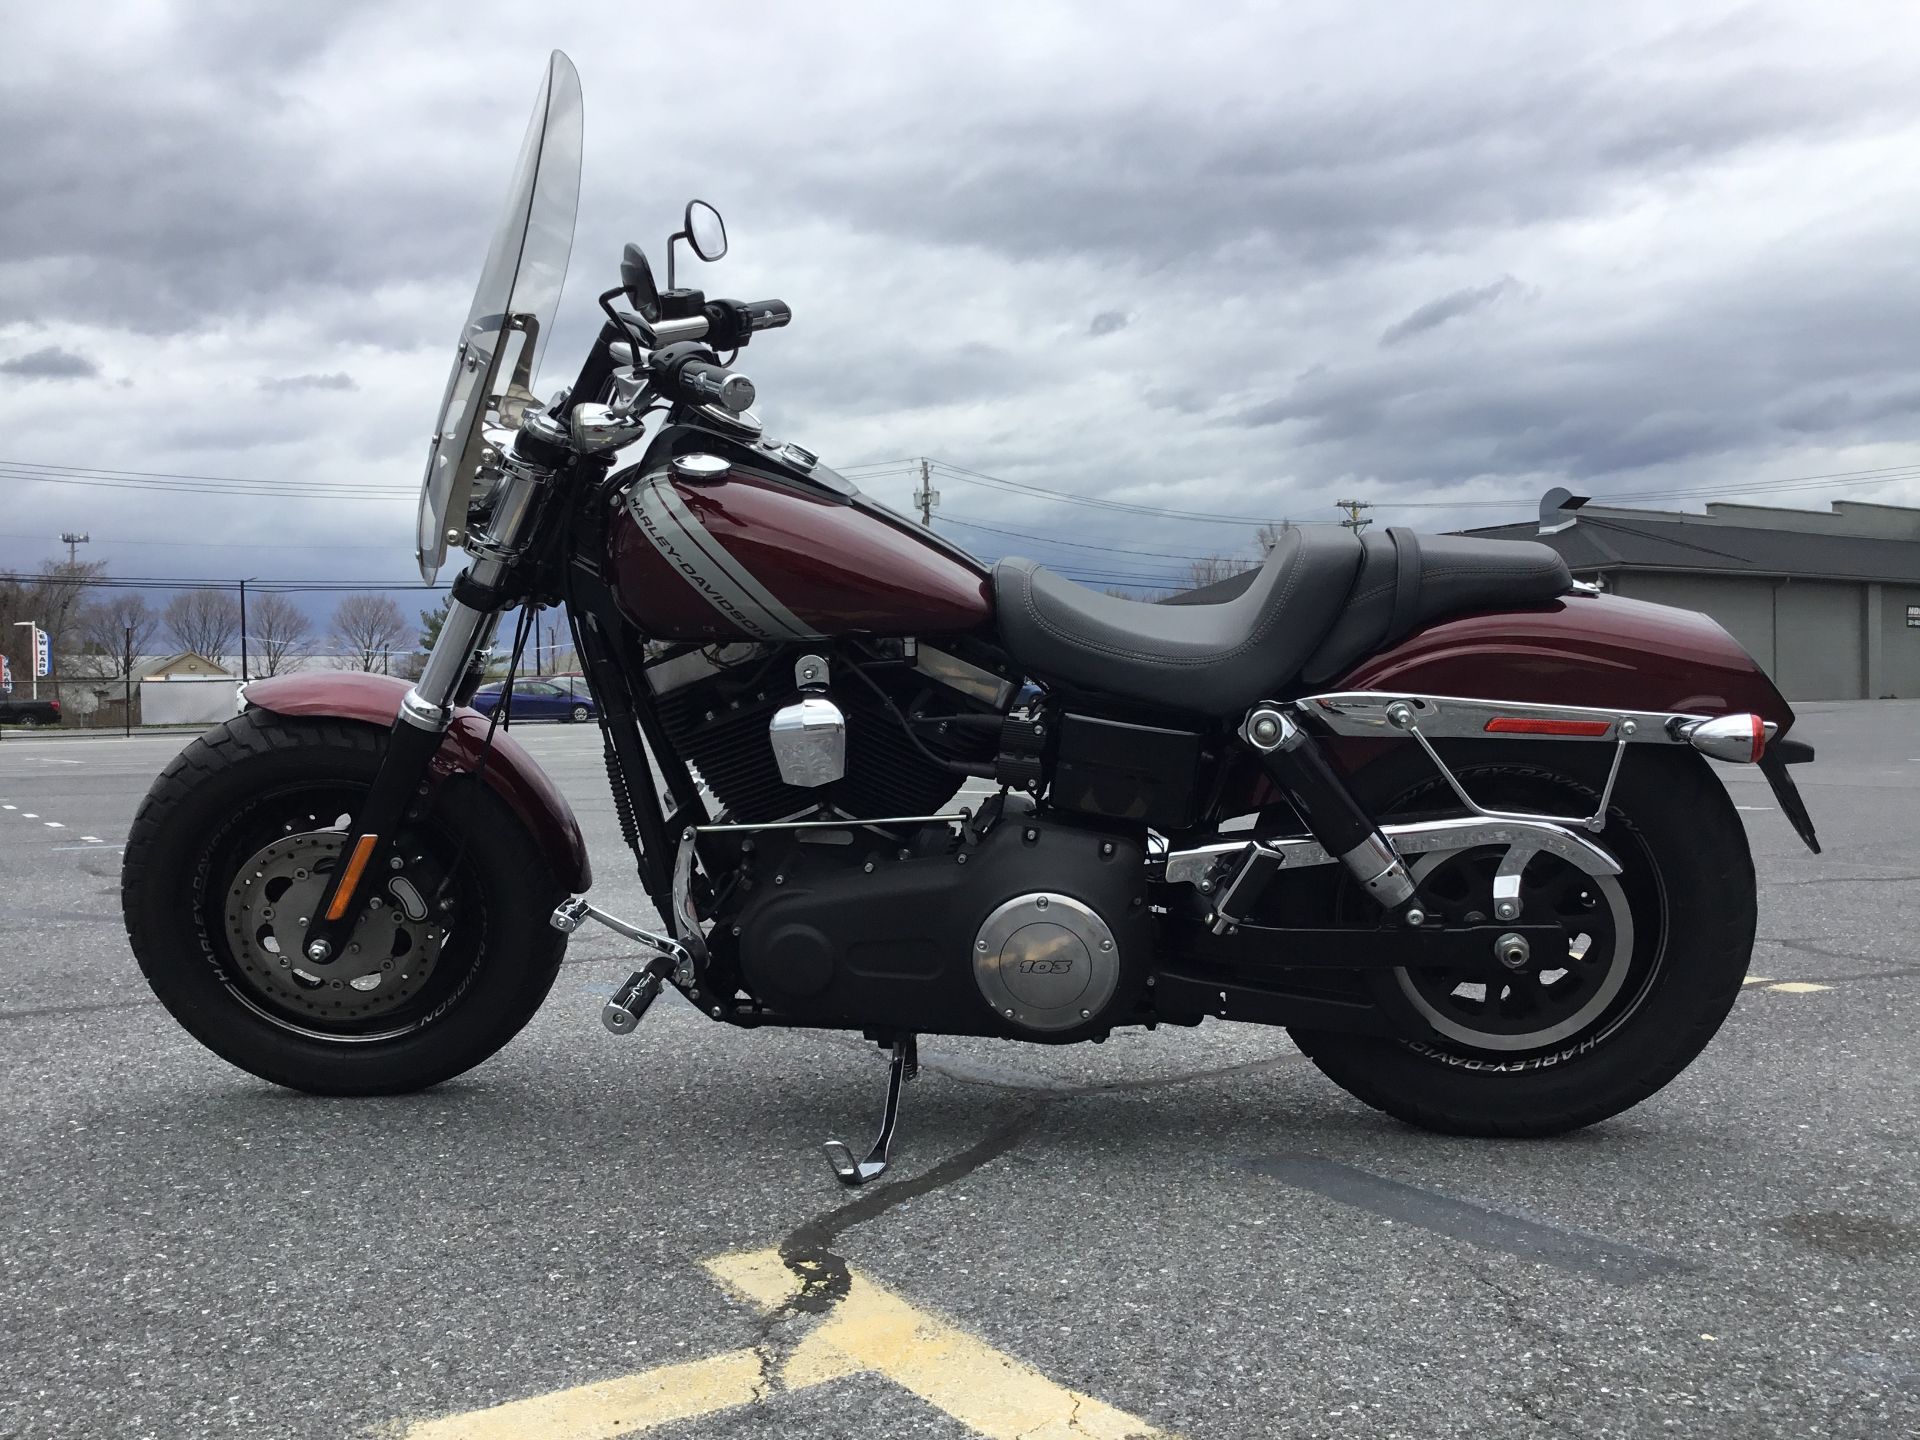 2015 Harley-Davidson FXDF103 in Frederick, Maryland - Photo 2